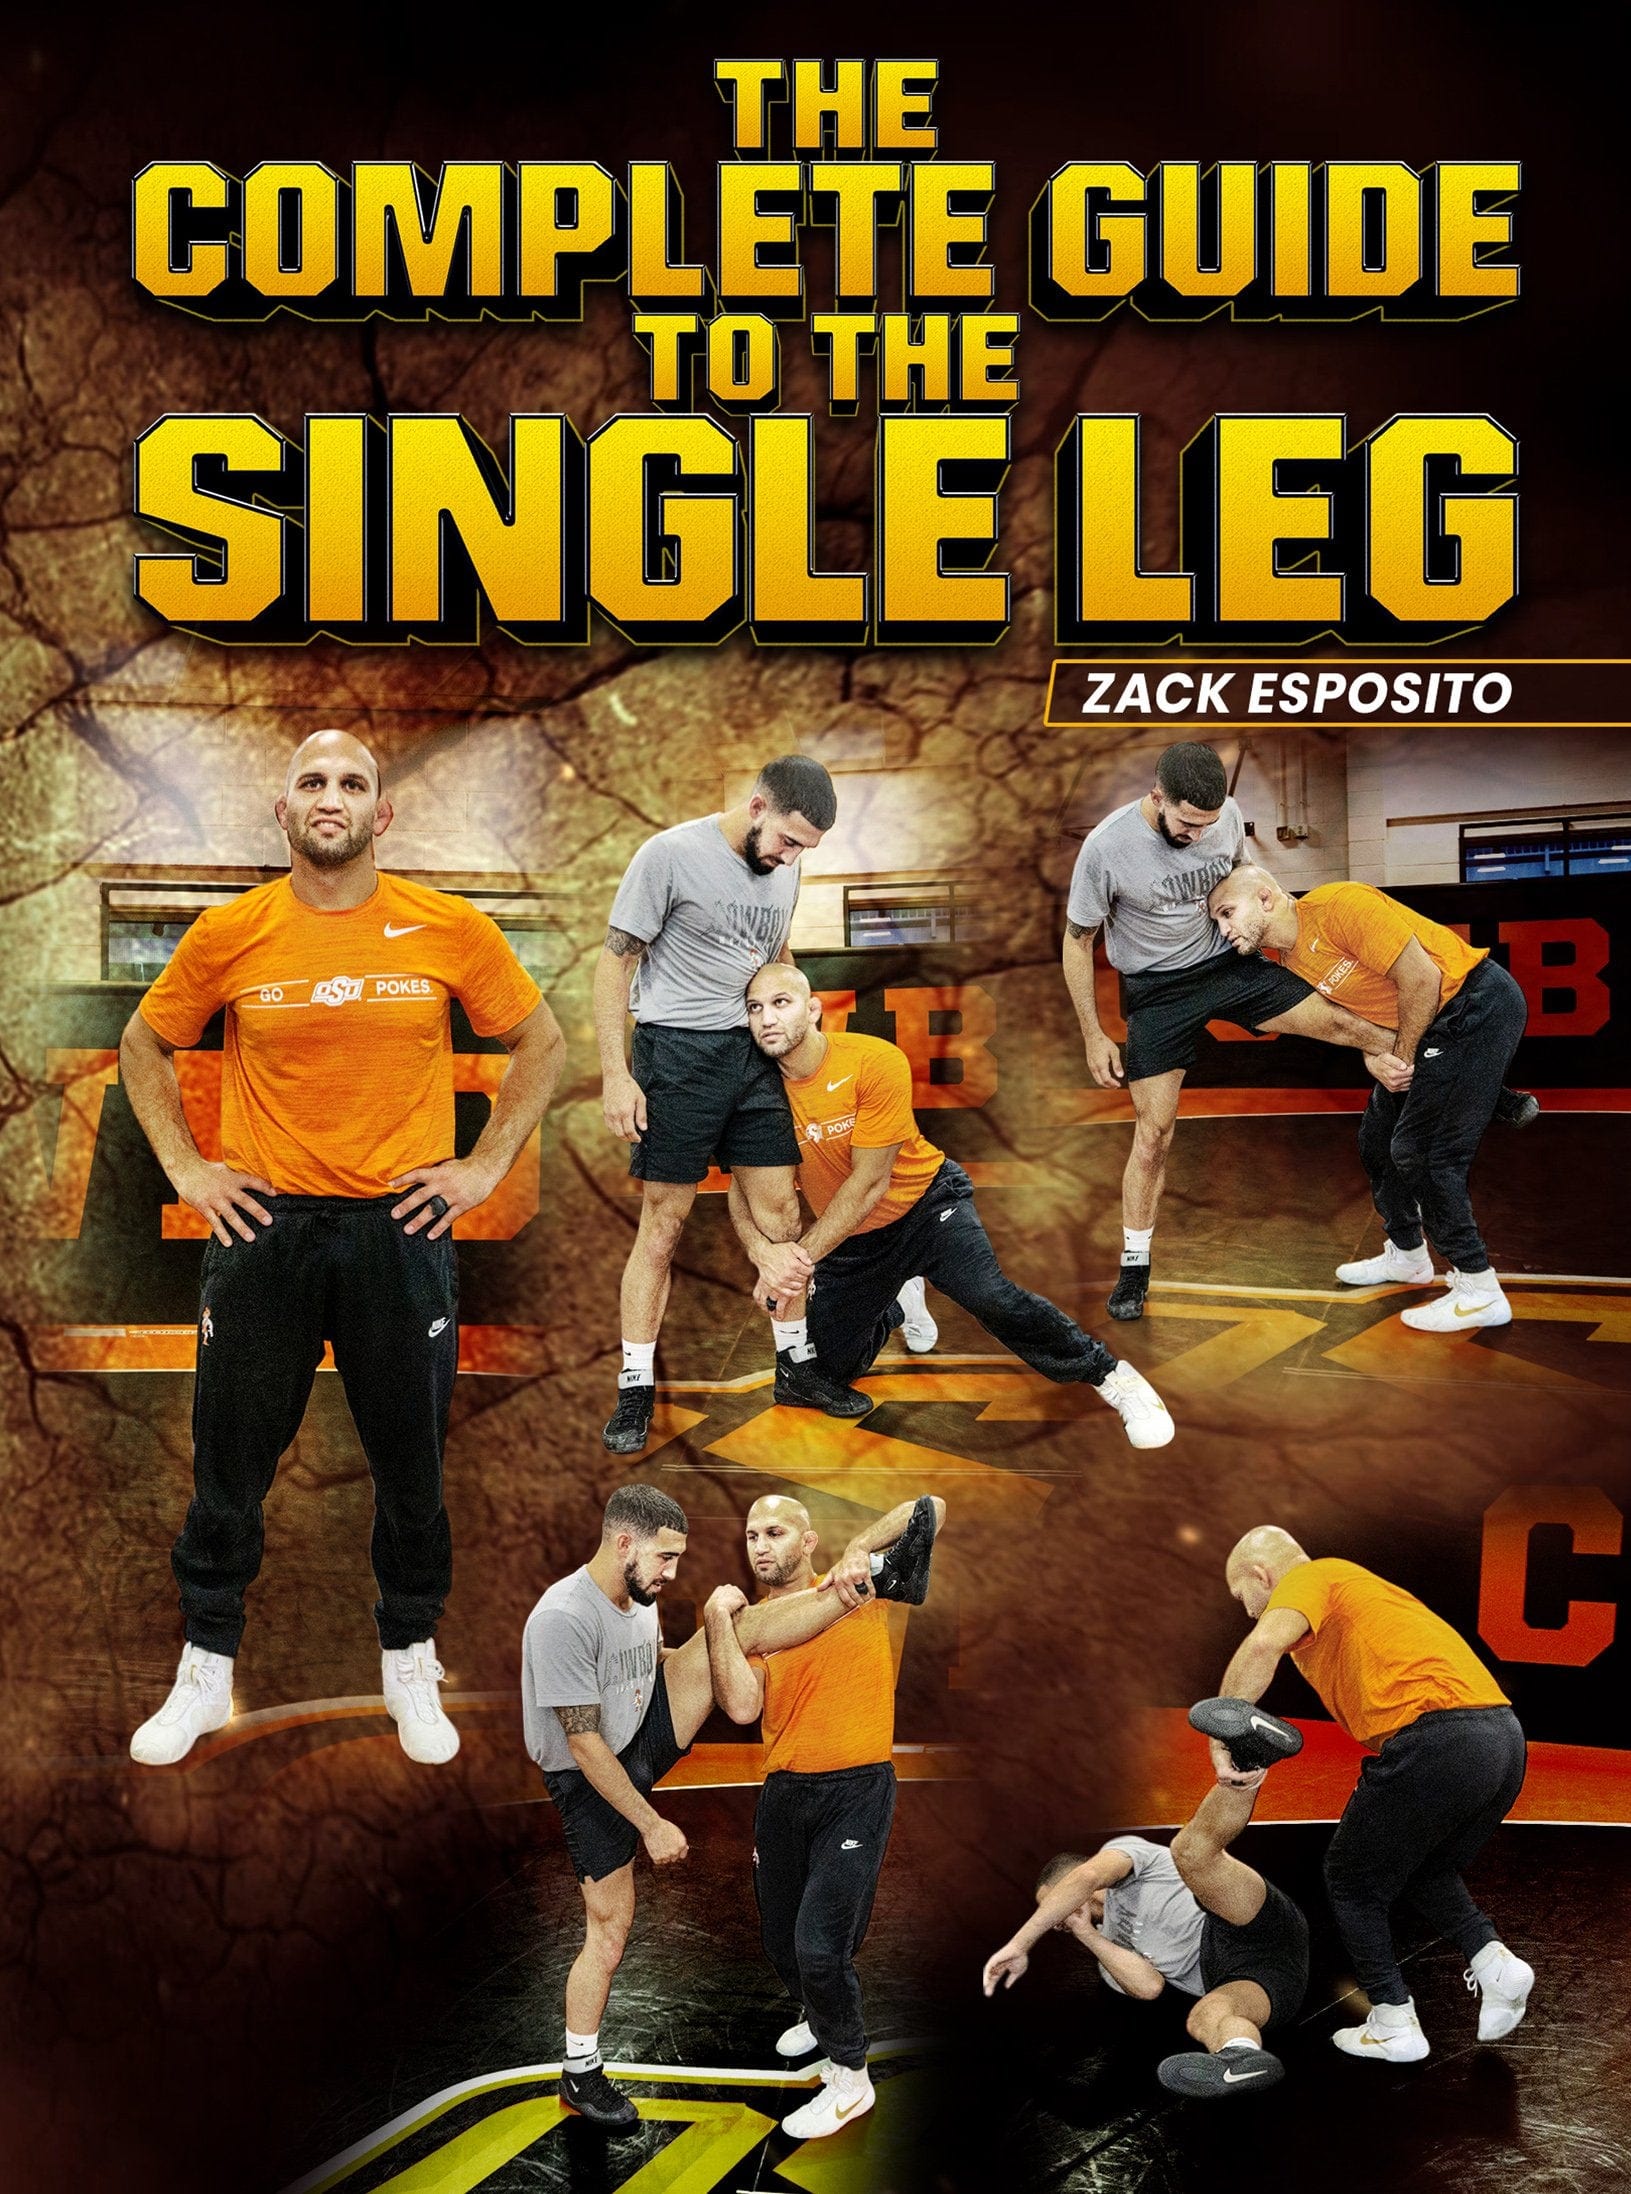 The Complete Guide To The Single Leg by Zack Esposito - Fanatic Wrestling